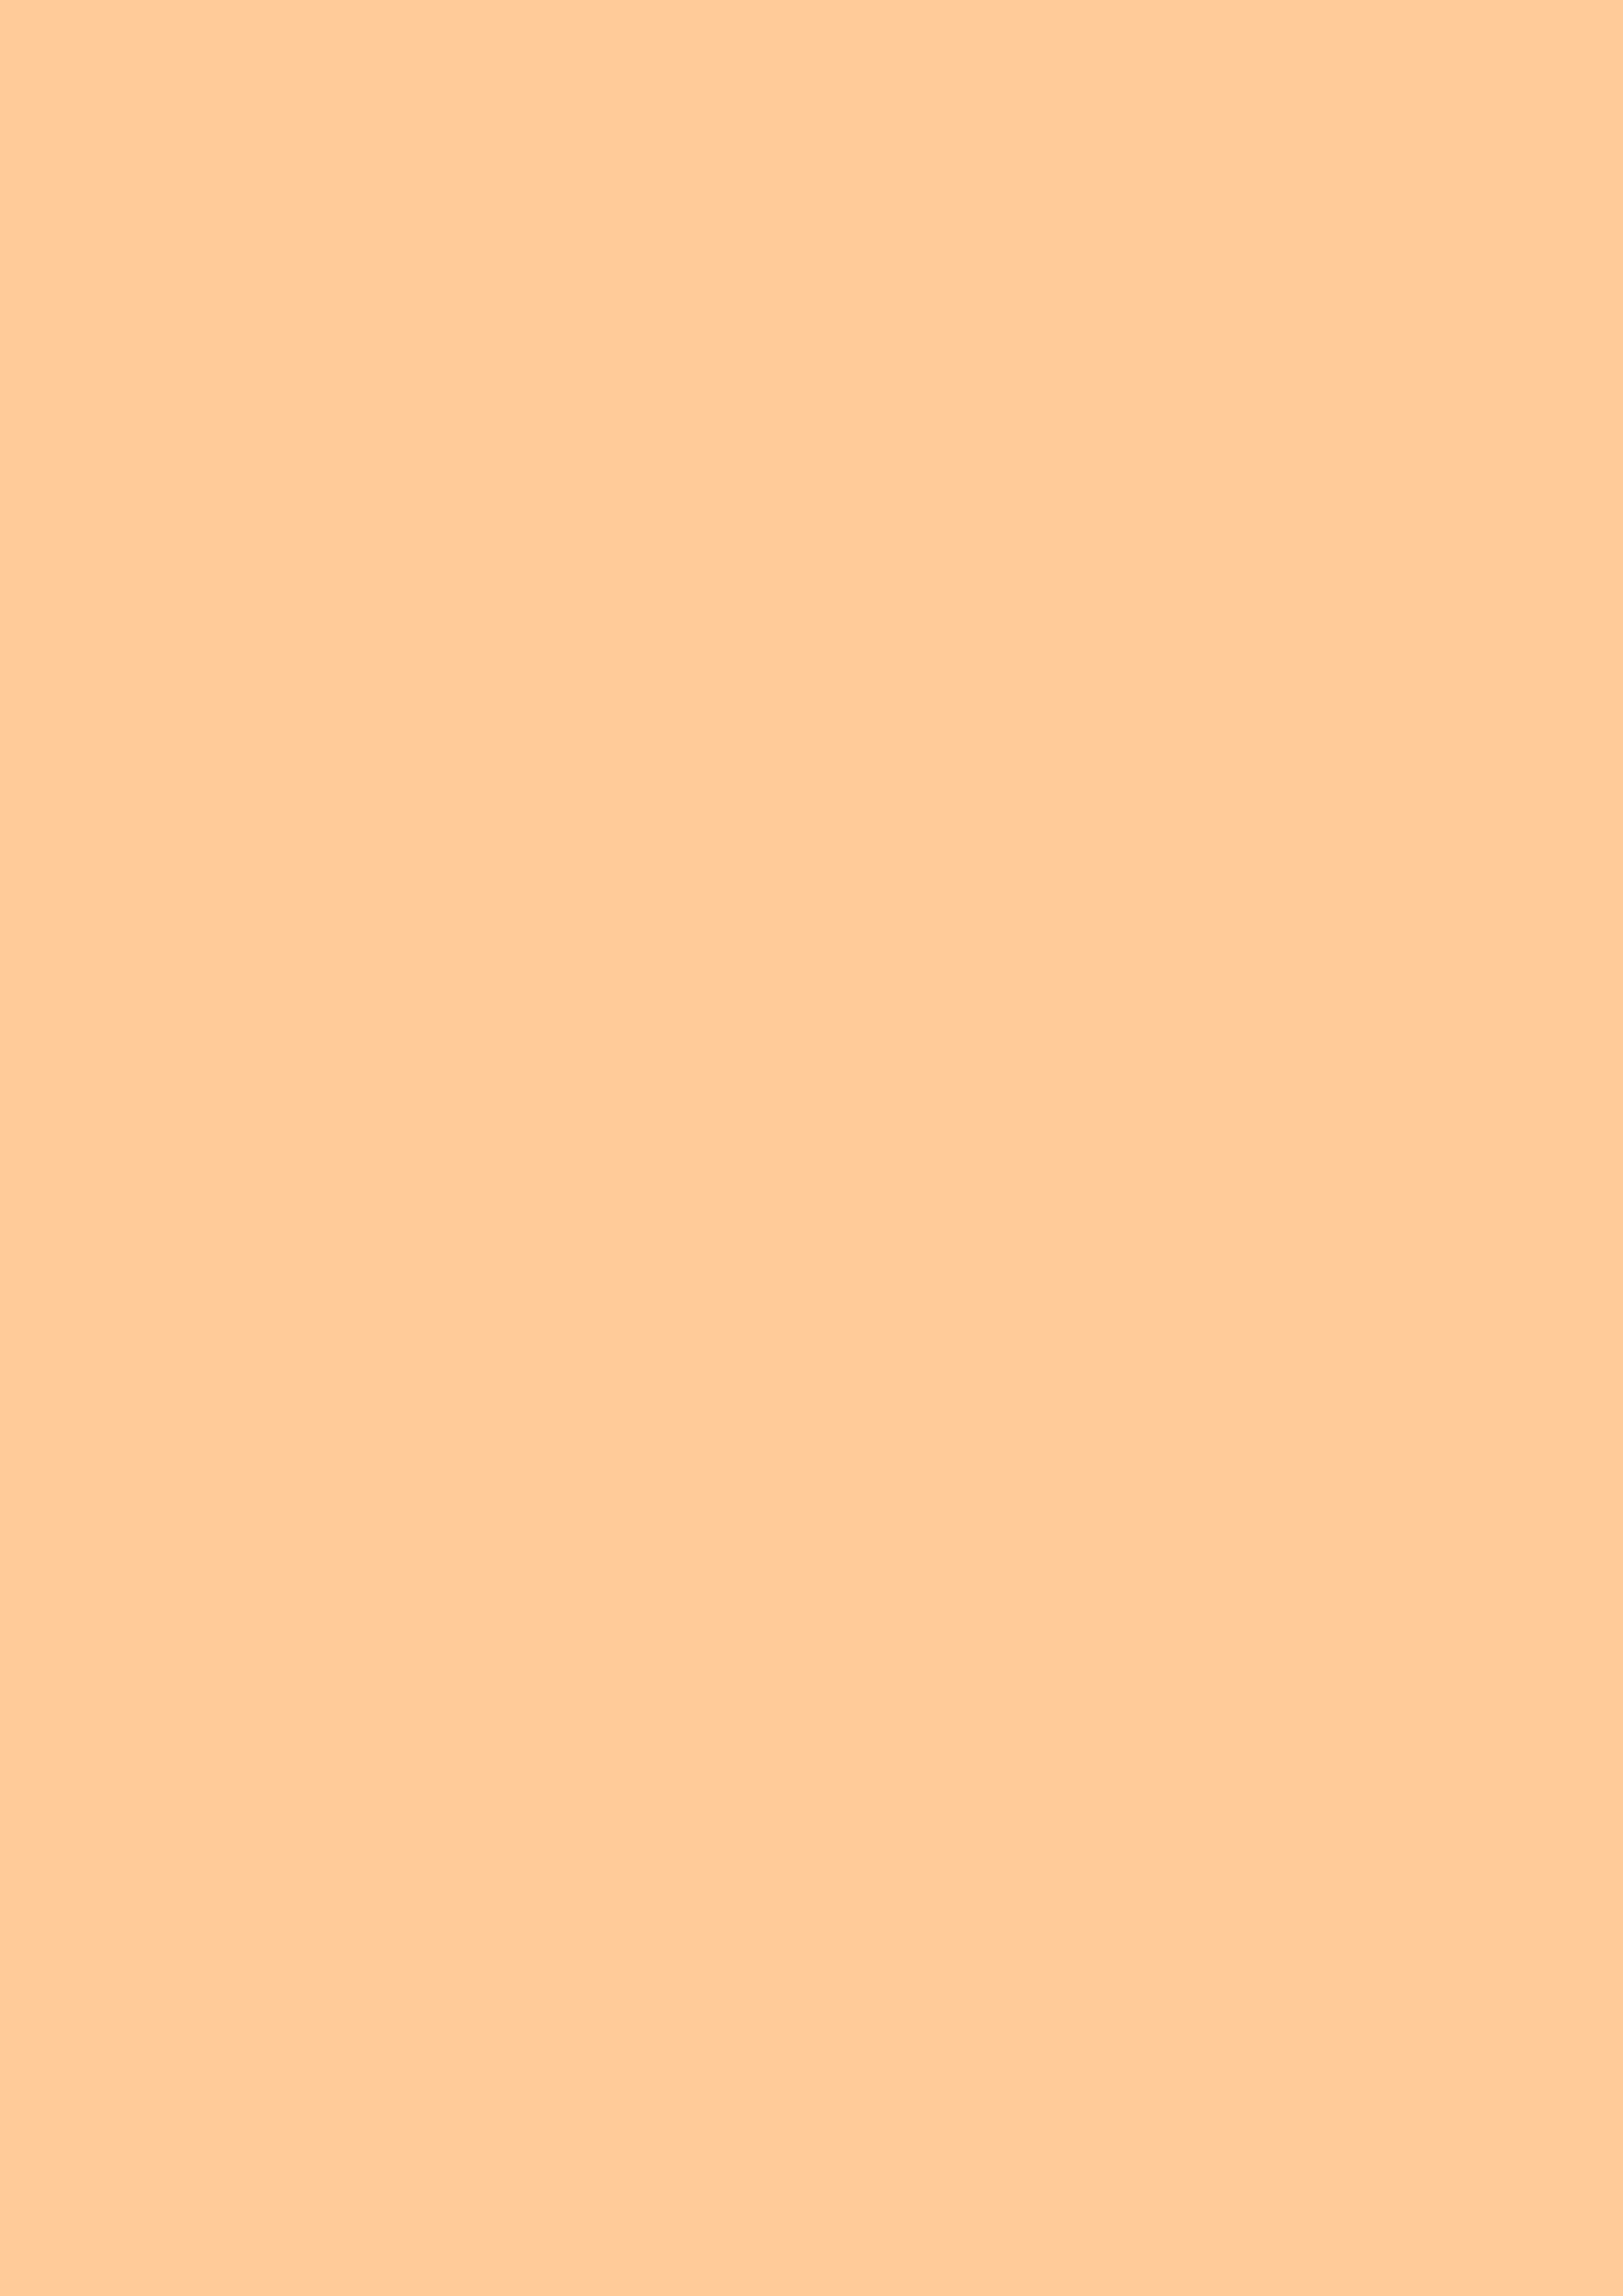 2480x3508 Peach-orange Solid Color Background